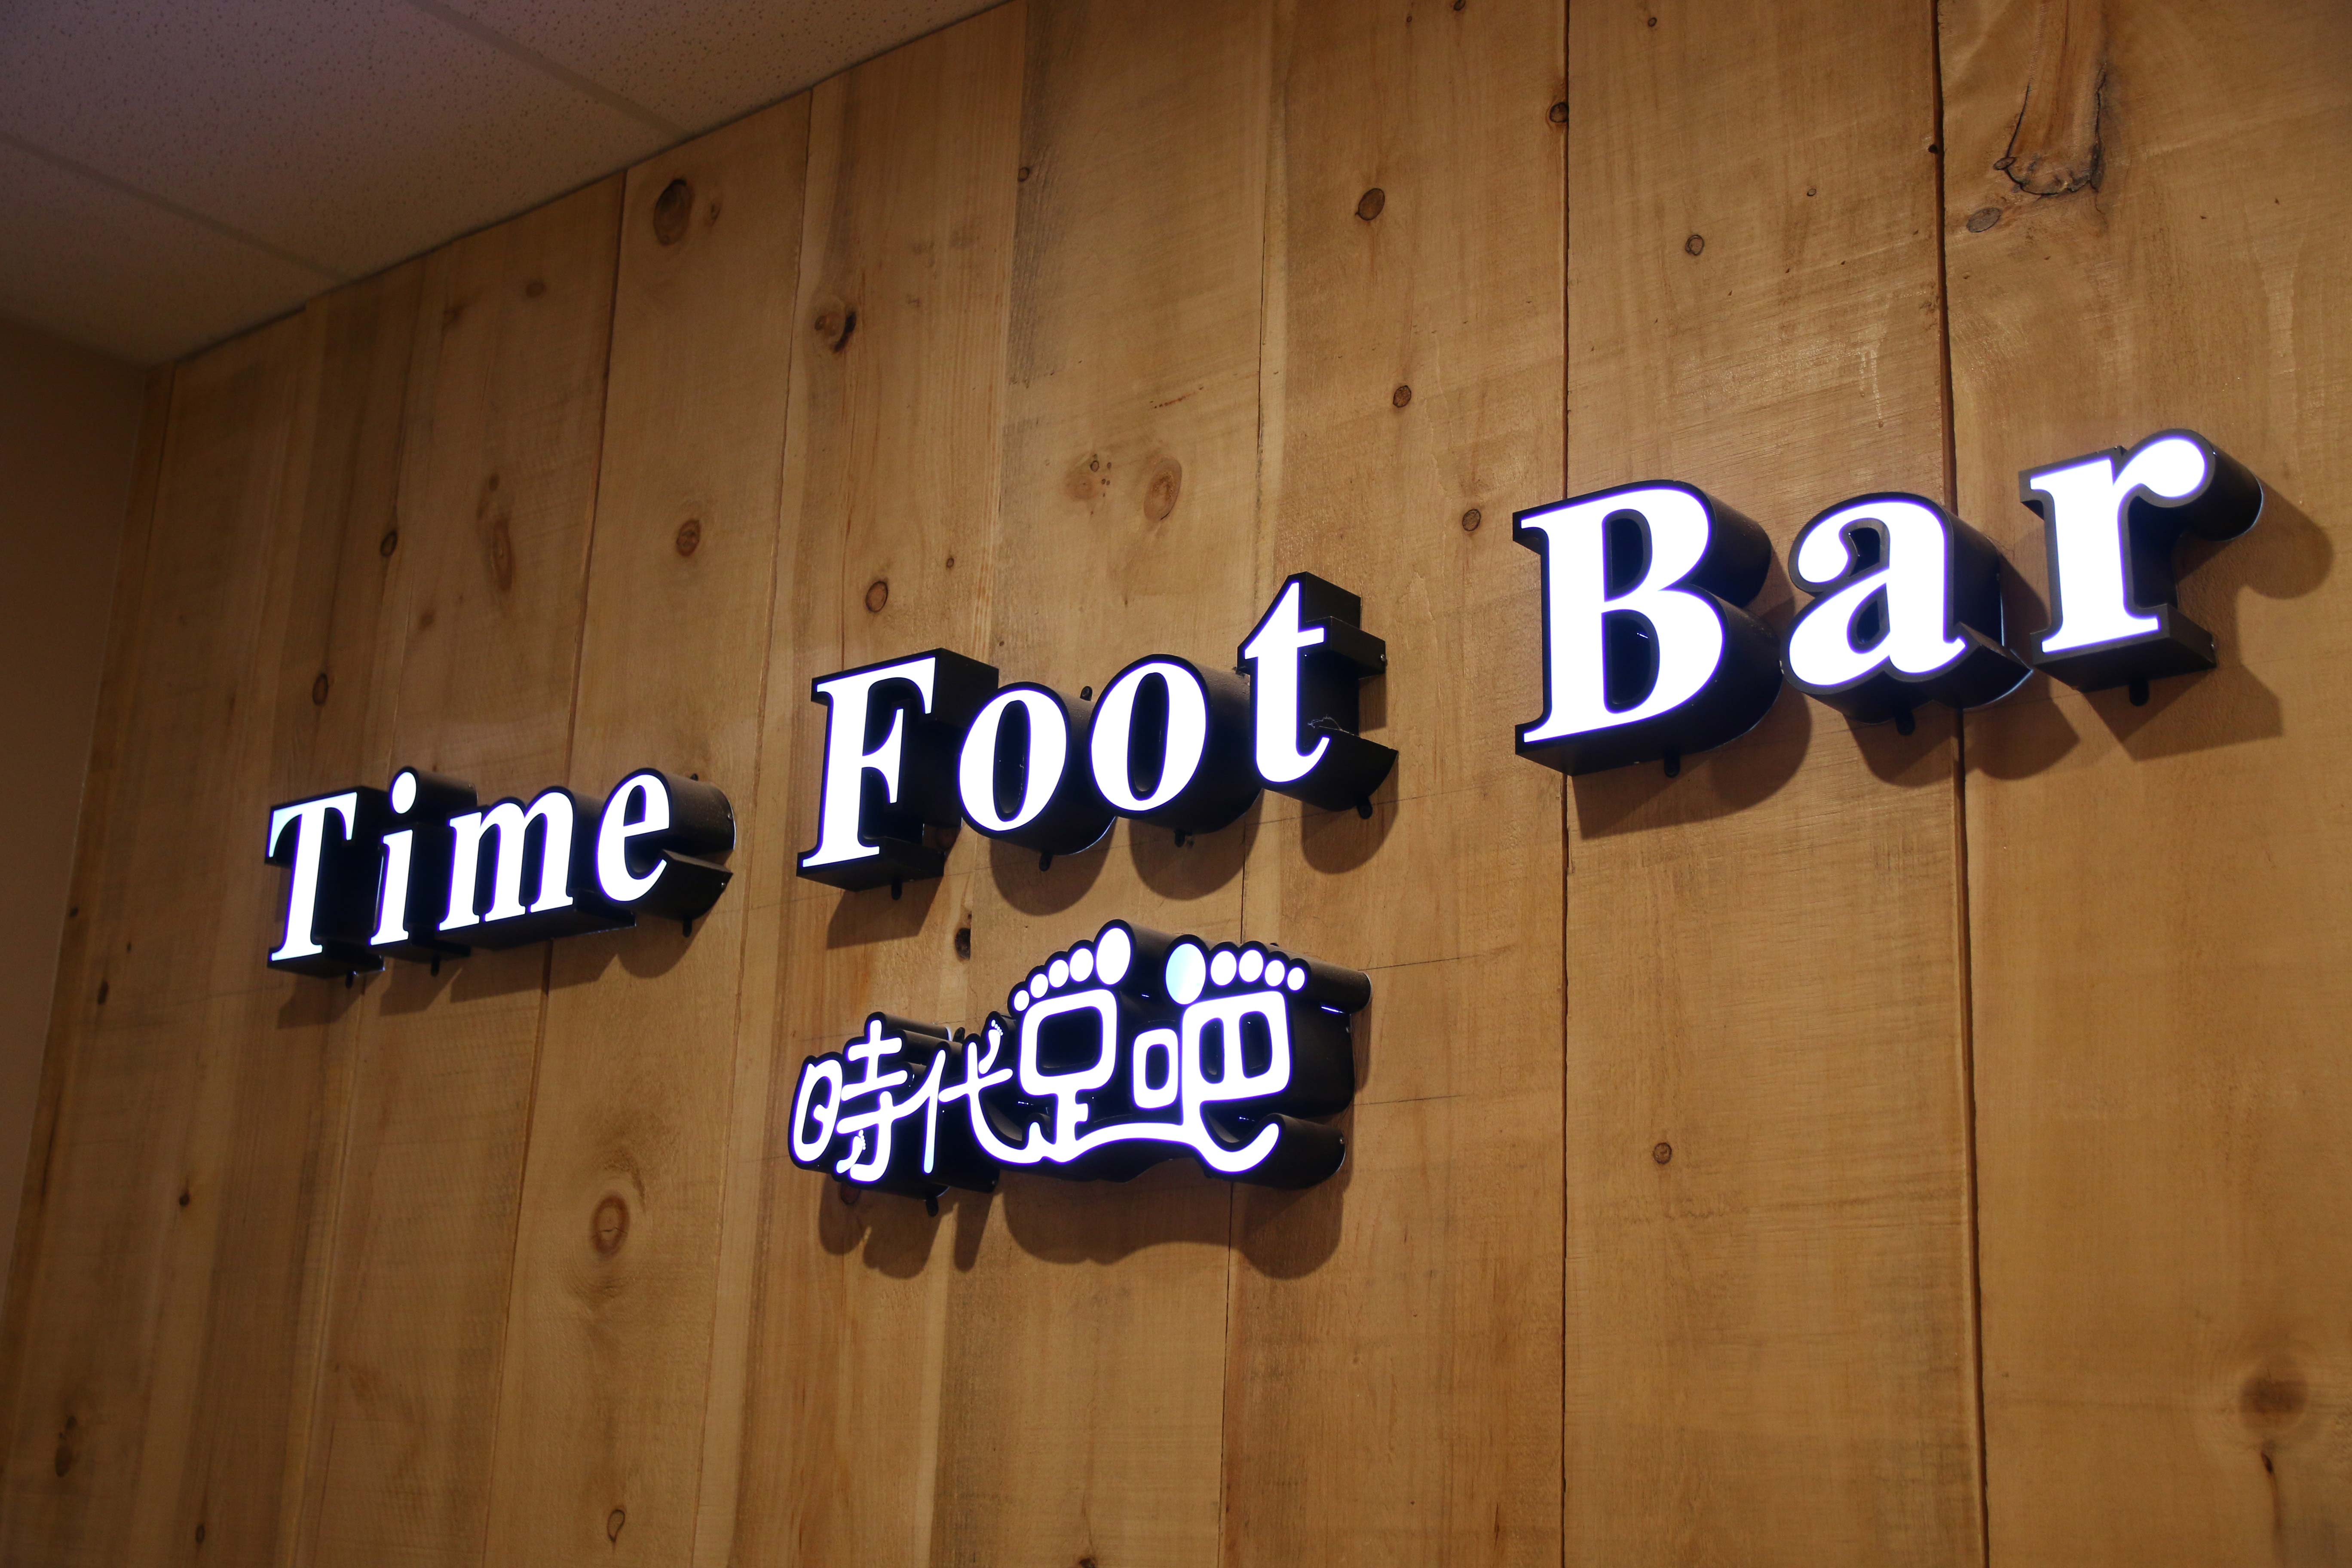 Time Foot Bar